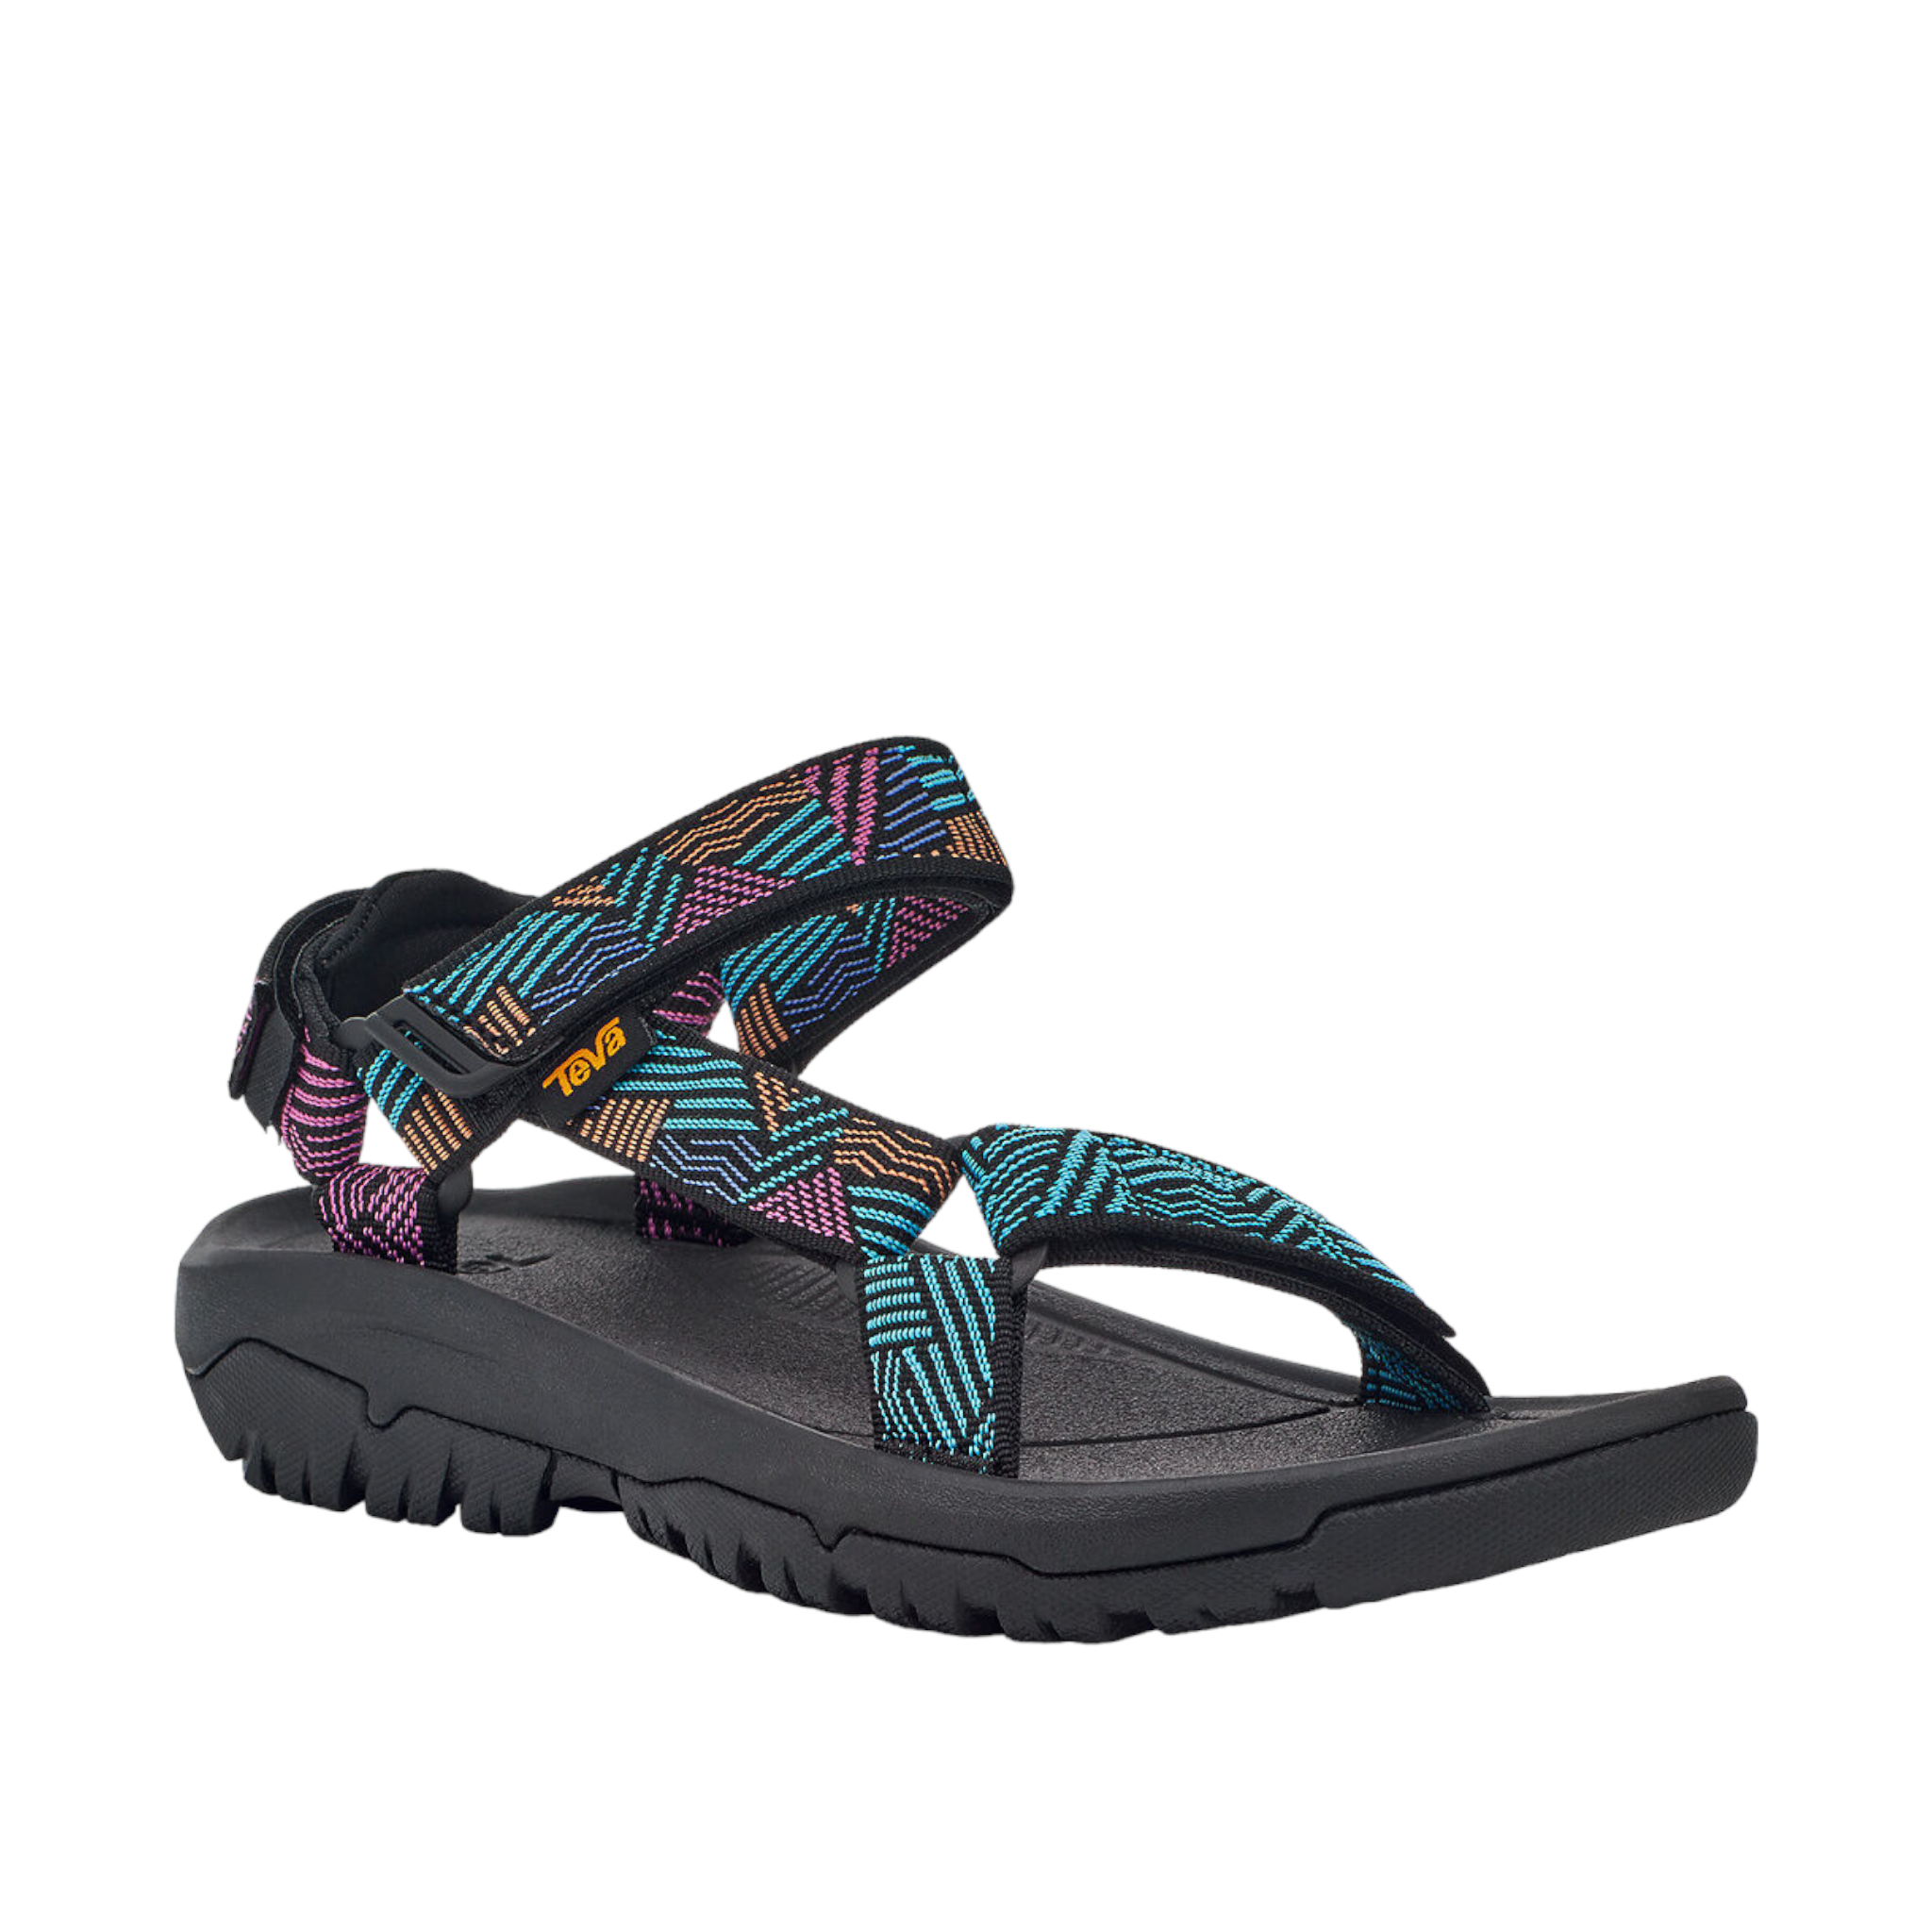 W Hurricane XLT2 - shoe&me - Teva - Sandal - Sandals, Summer, Womens